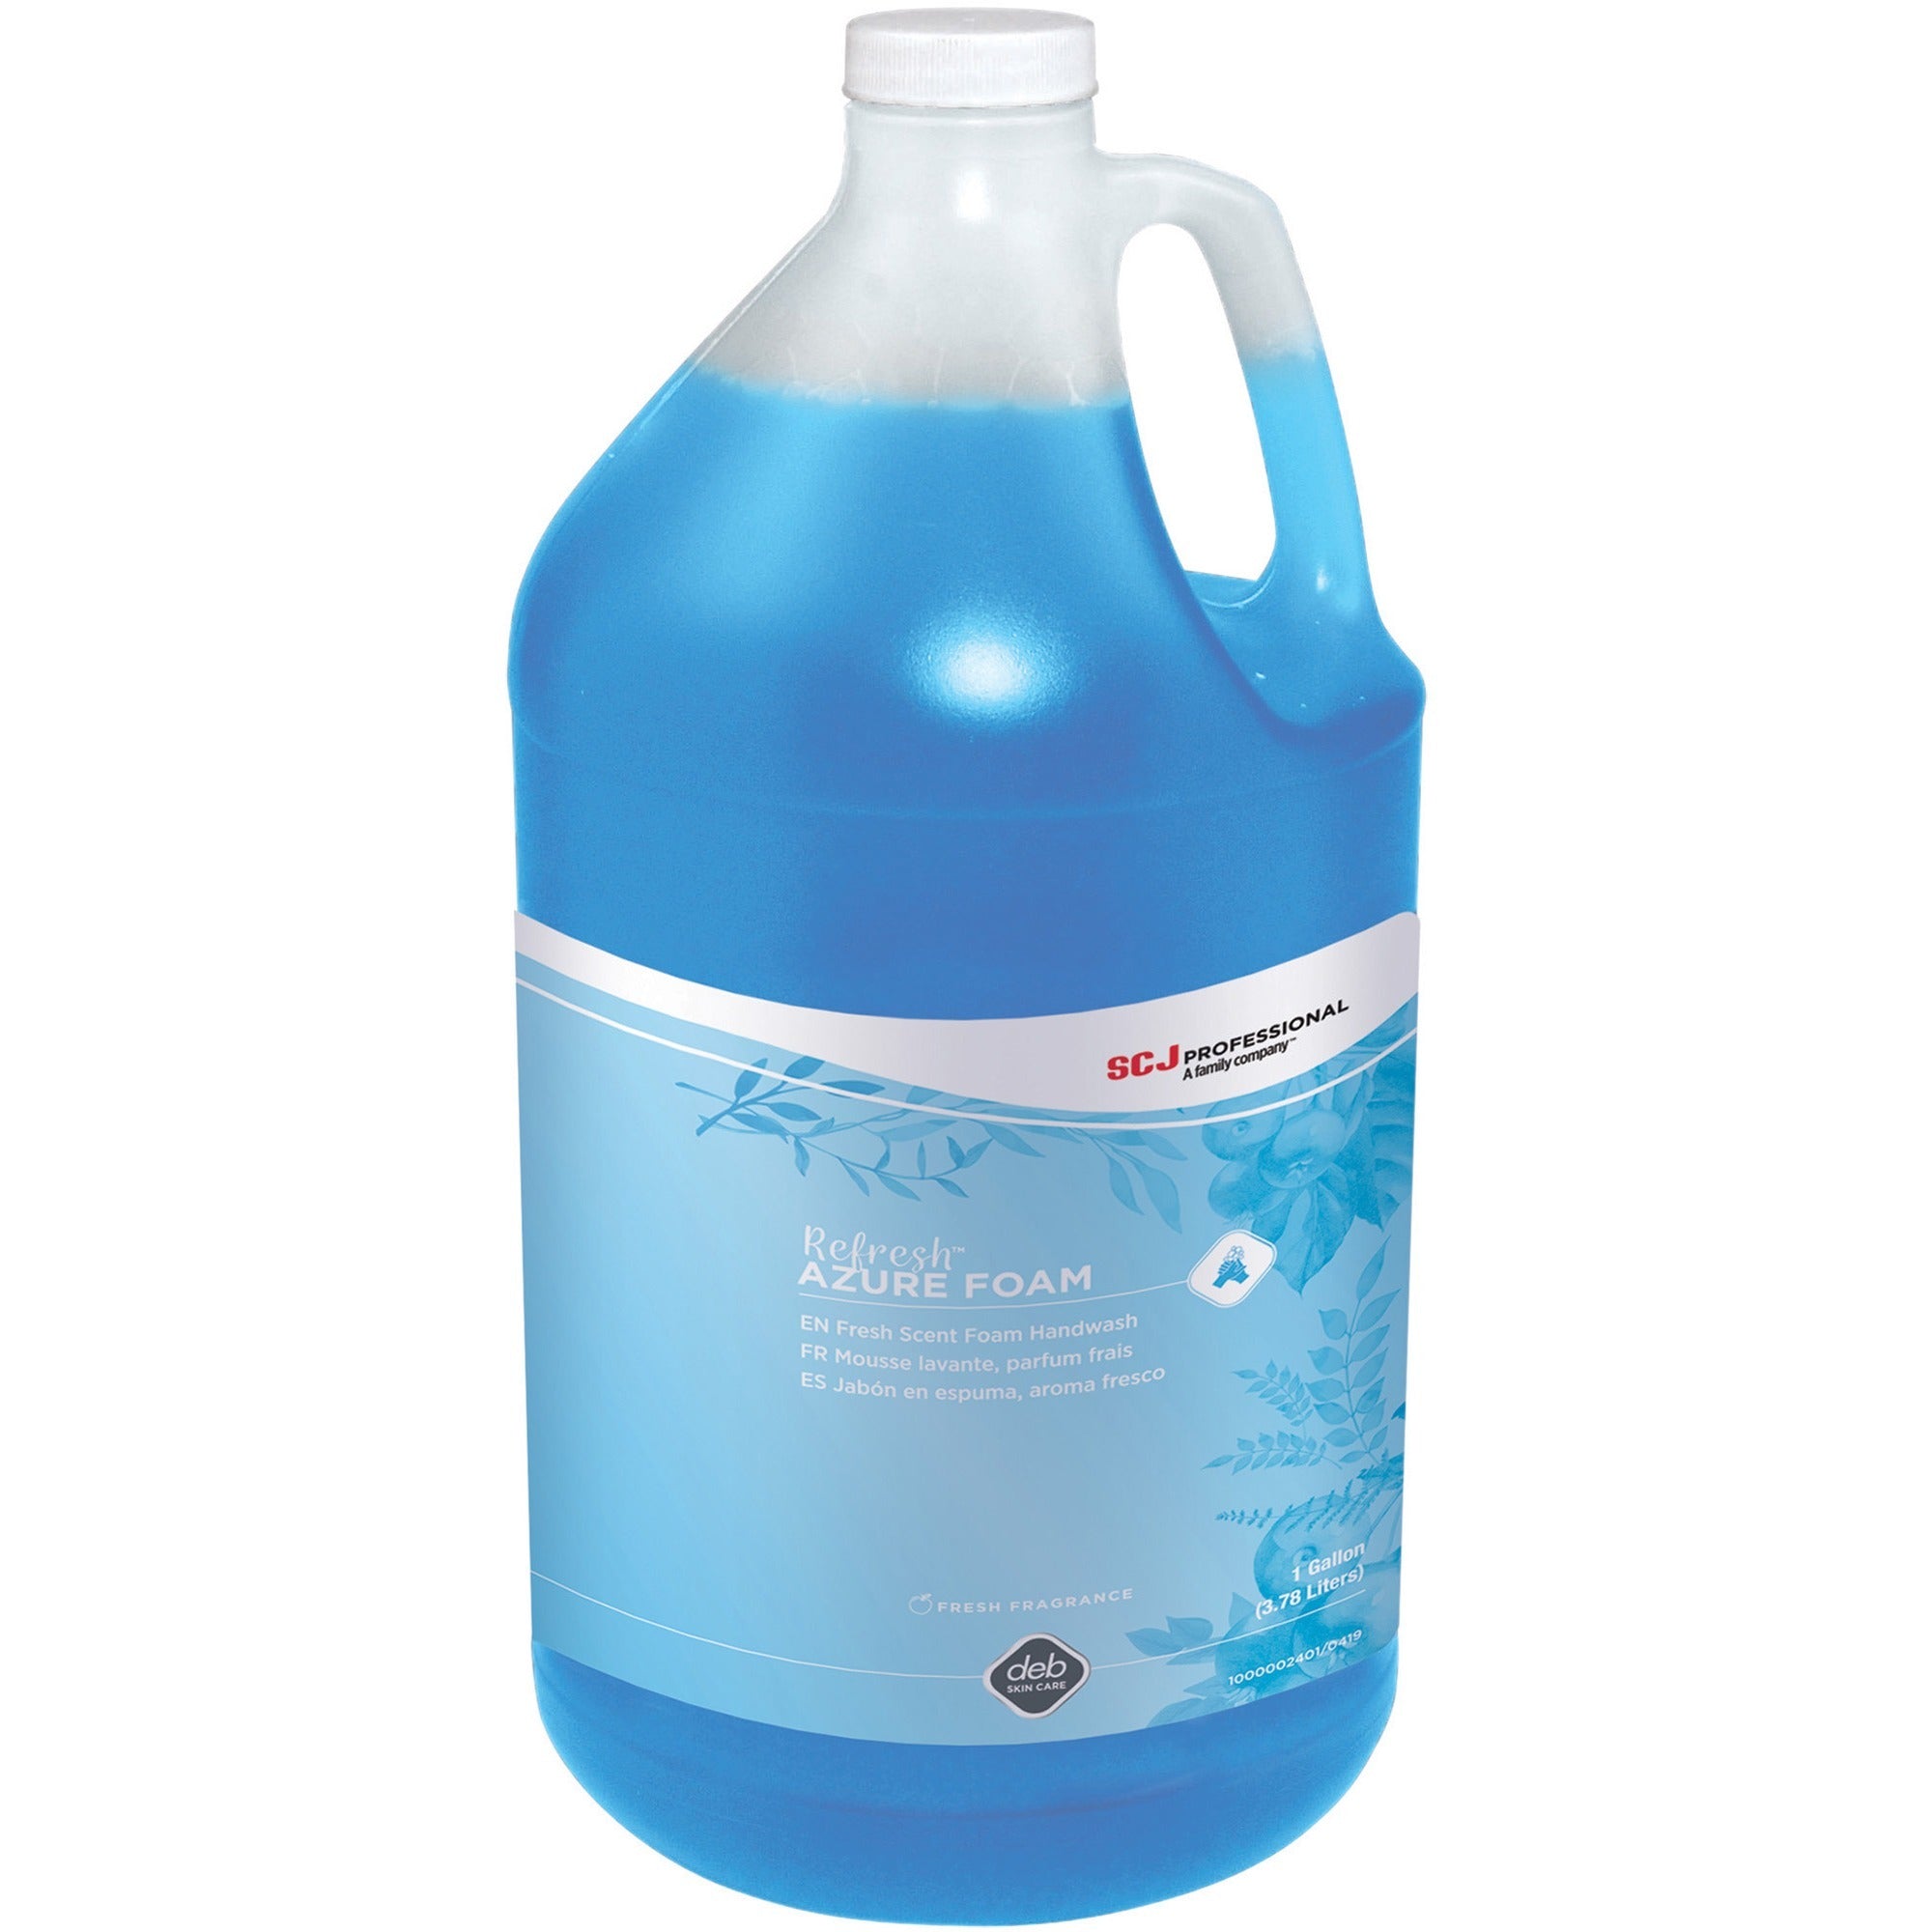 sc-johnson-fresh-apple-refill-foam-hand-soap-fresh-apple-scentfor-1-gal-38-l-dirt-remover-kill-germs-hand-moisturizing-blue-anti-irritant-non-drying-1-each_sjn51105 - 1